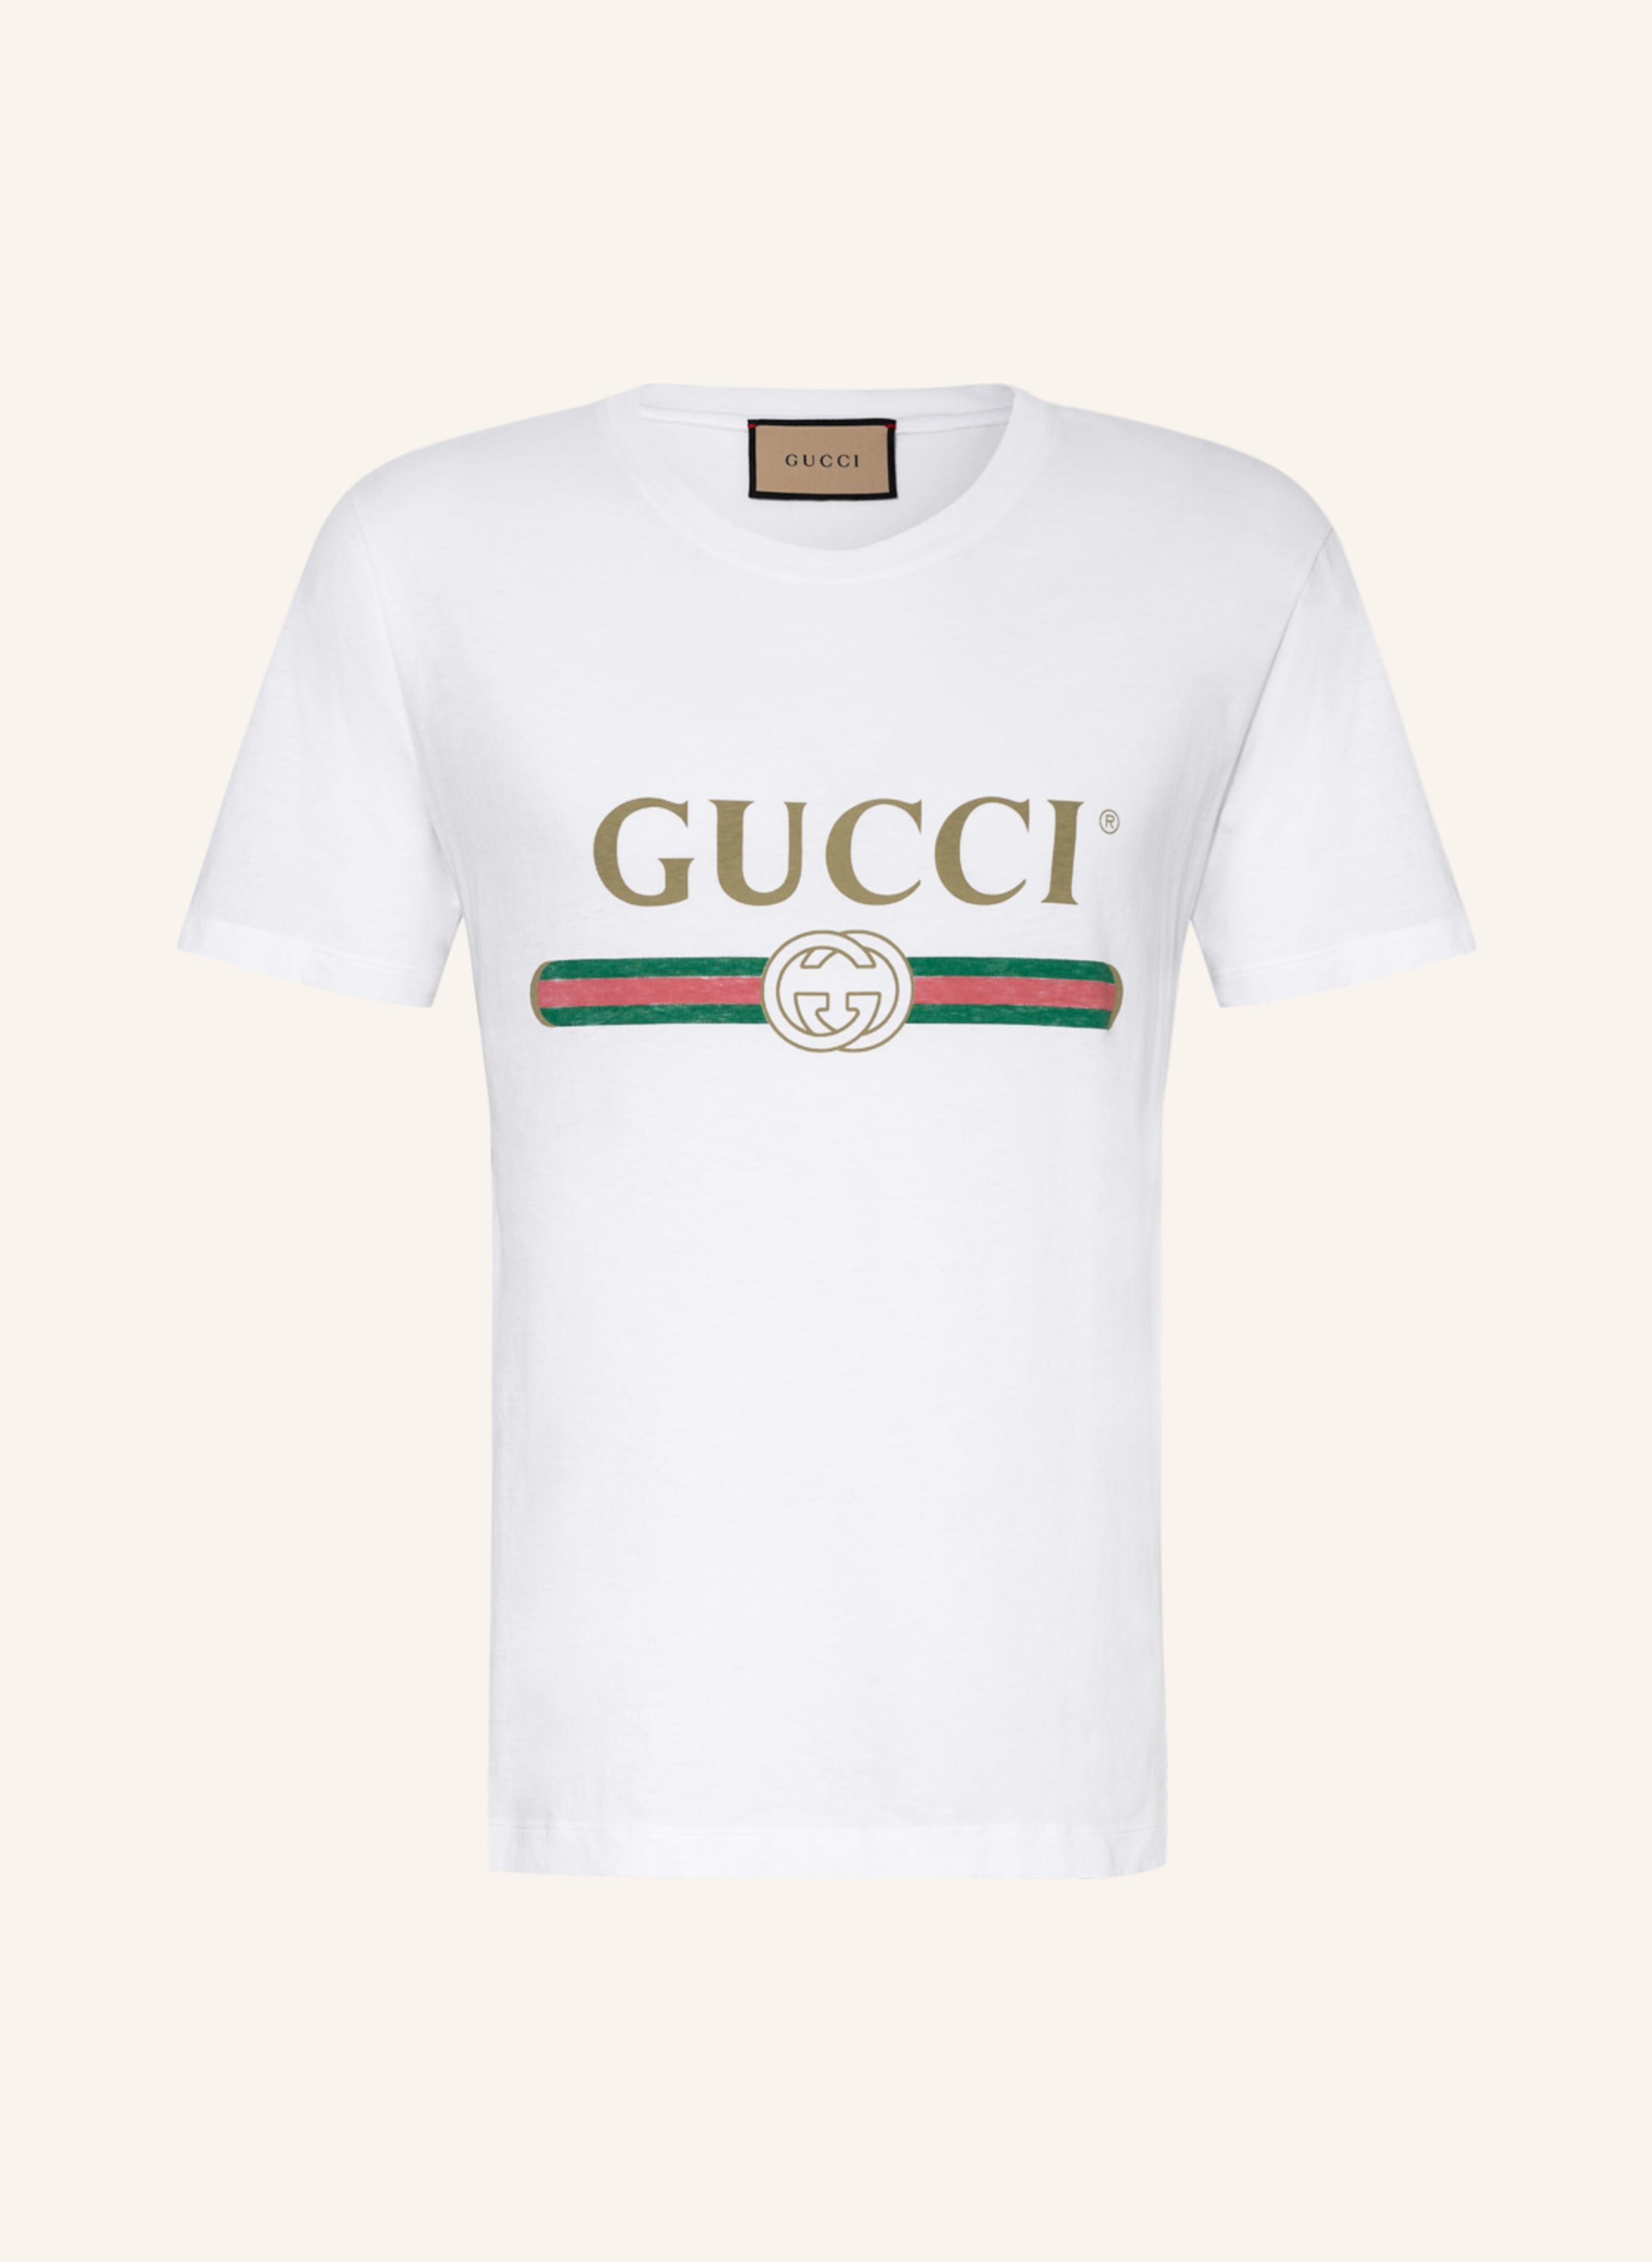 GUCCI T-shirt in white | Breuninger